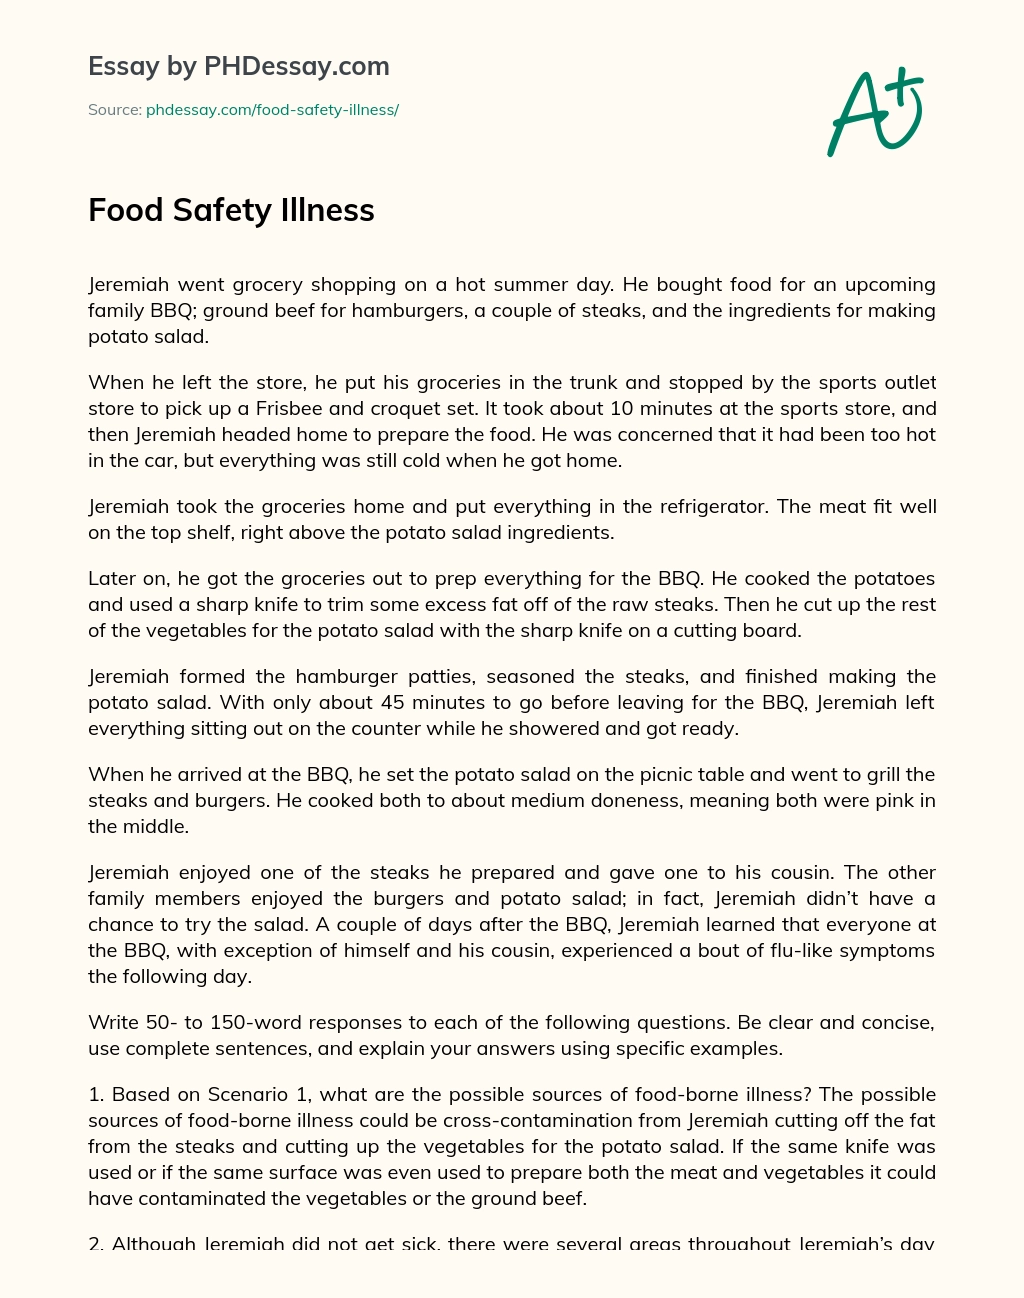 Food Safety Illness essay